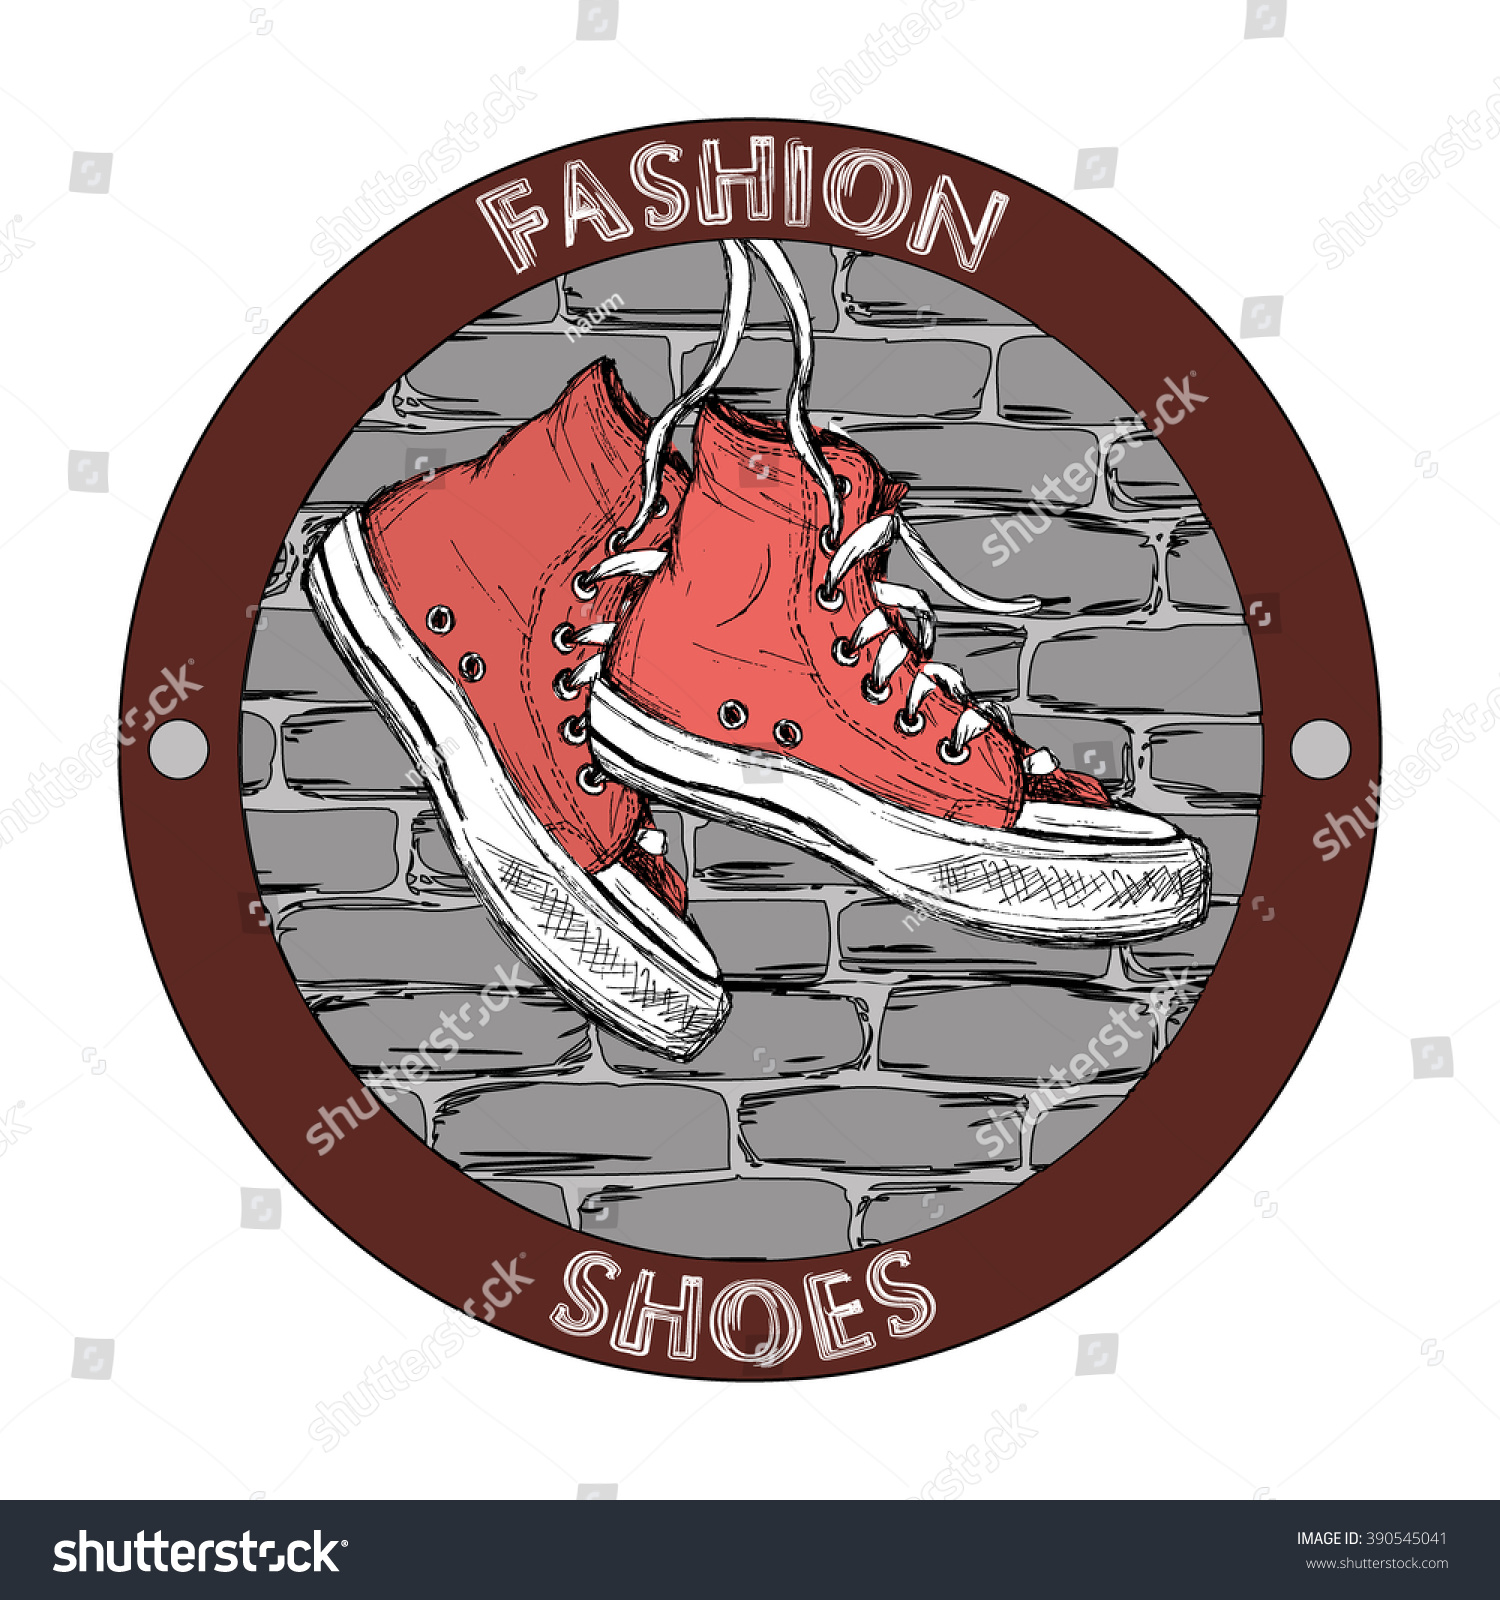 Hipster gumshoe logo. Grunge hand drawn vector - Royalty Free Stock ...